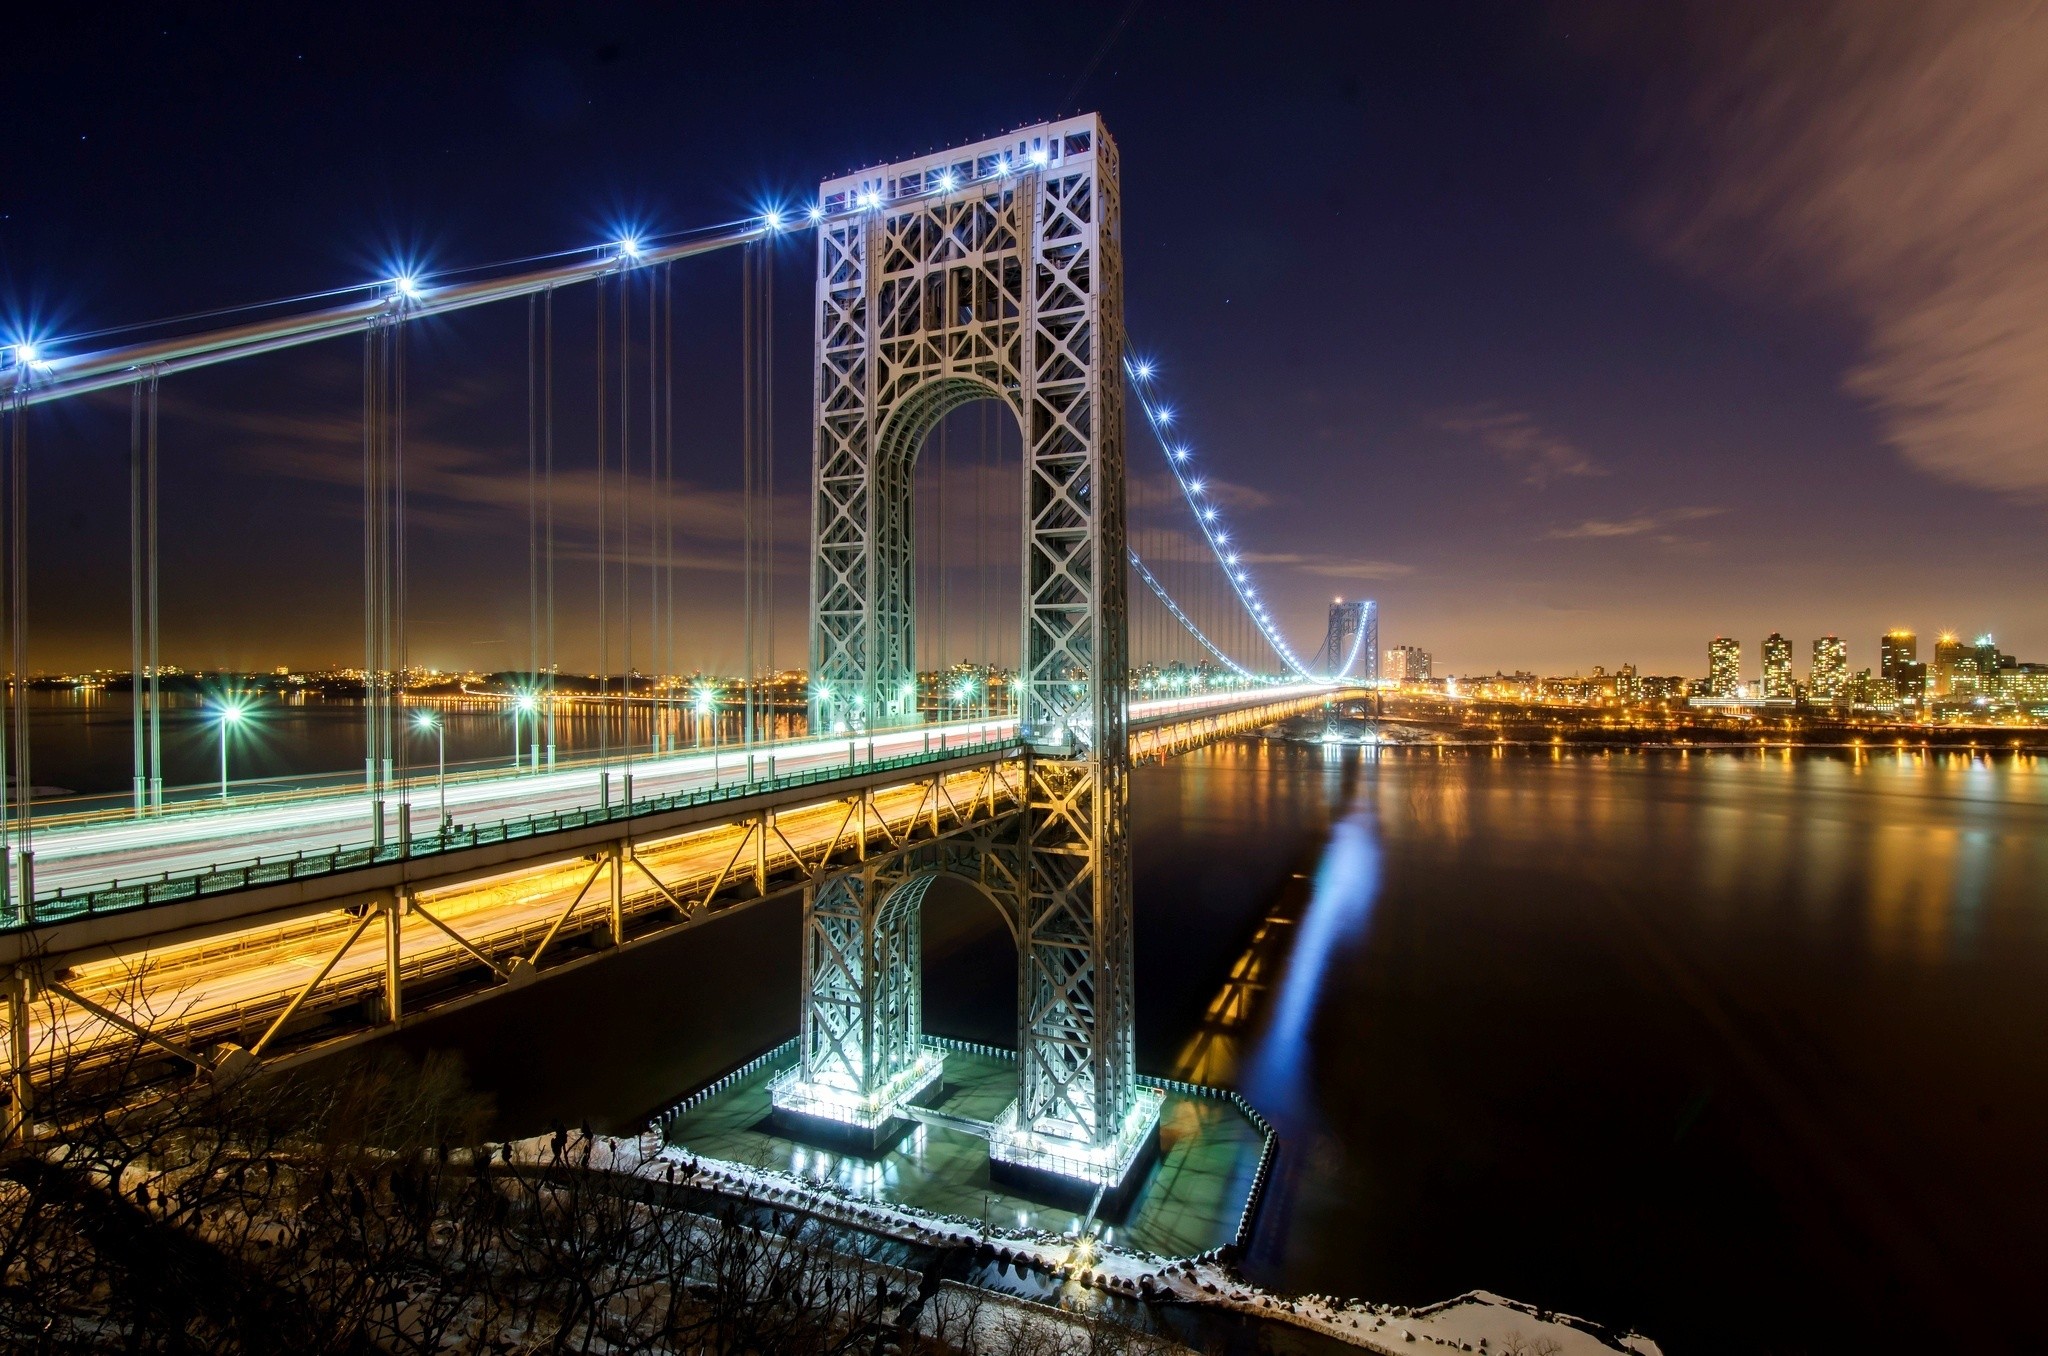 The Night Bridge in New York